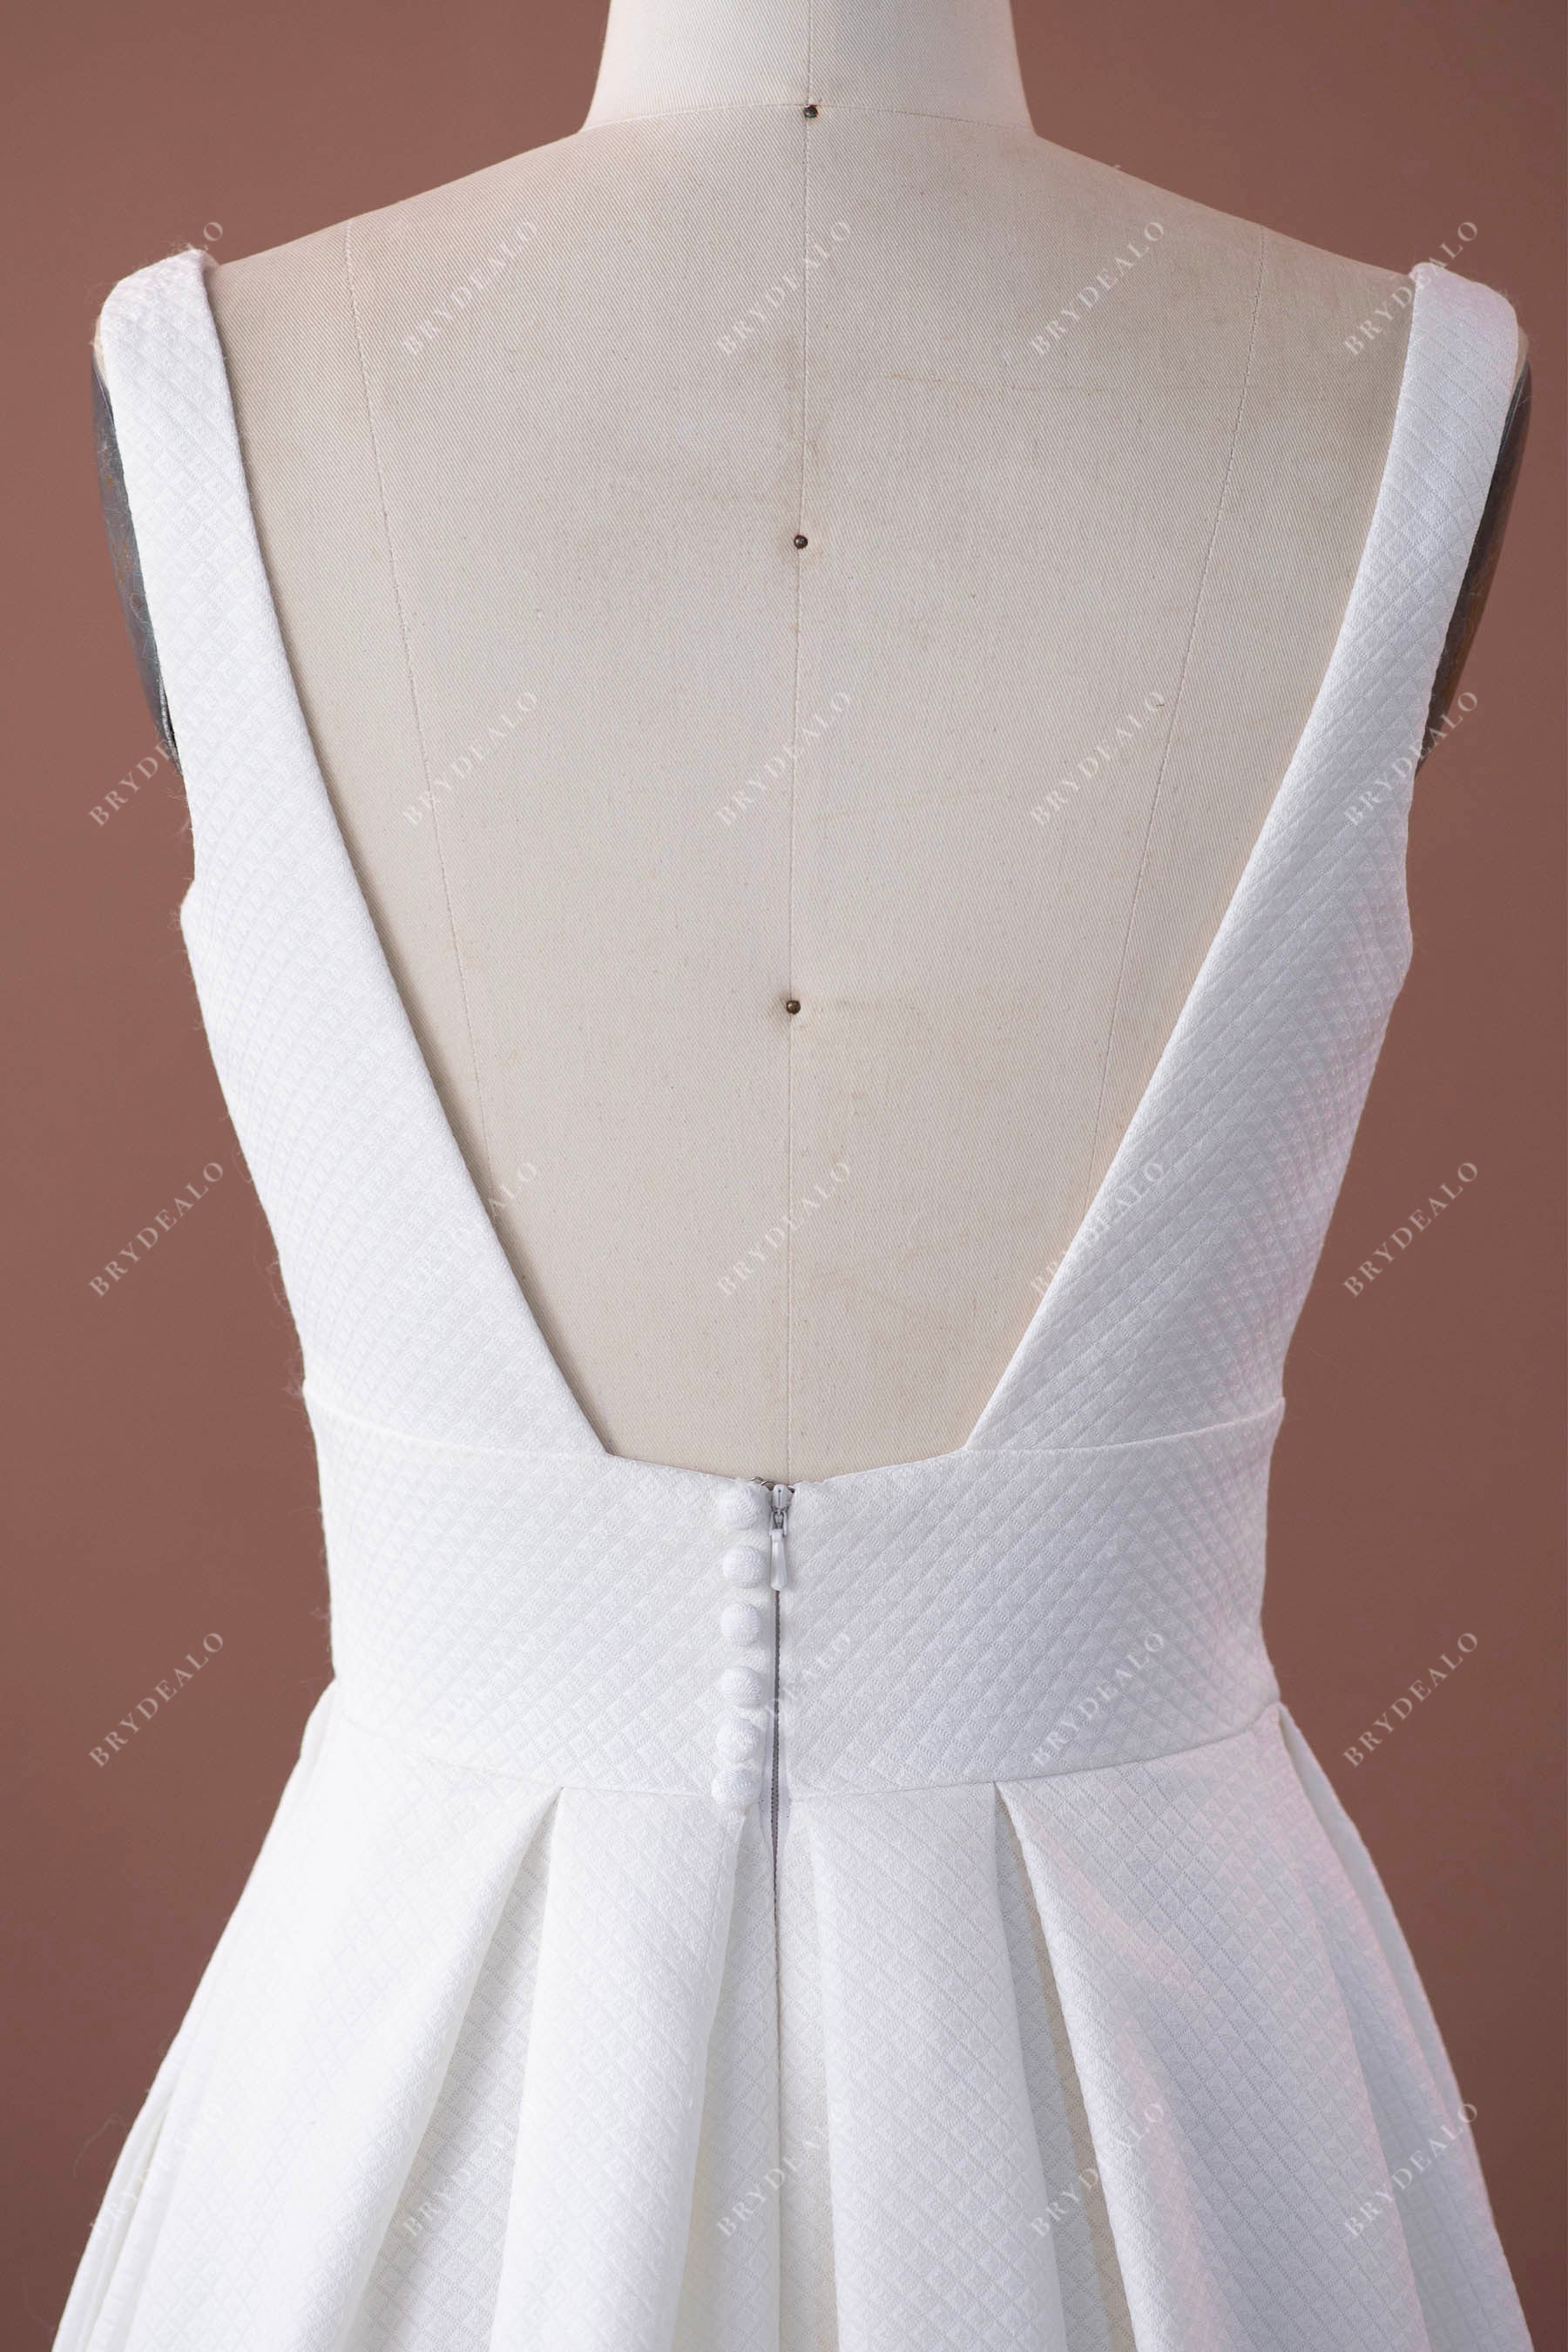 simple straps open button back A-line wedding dress